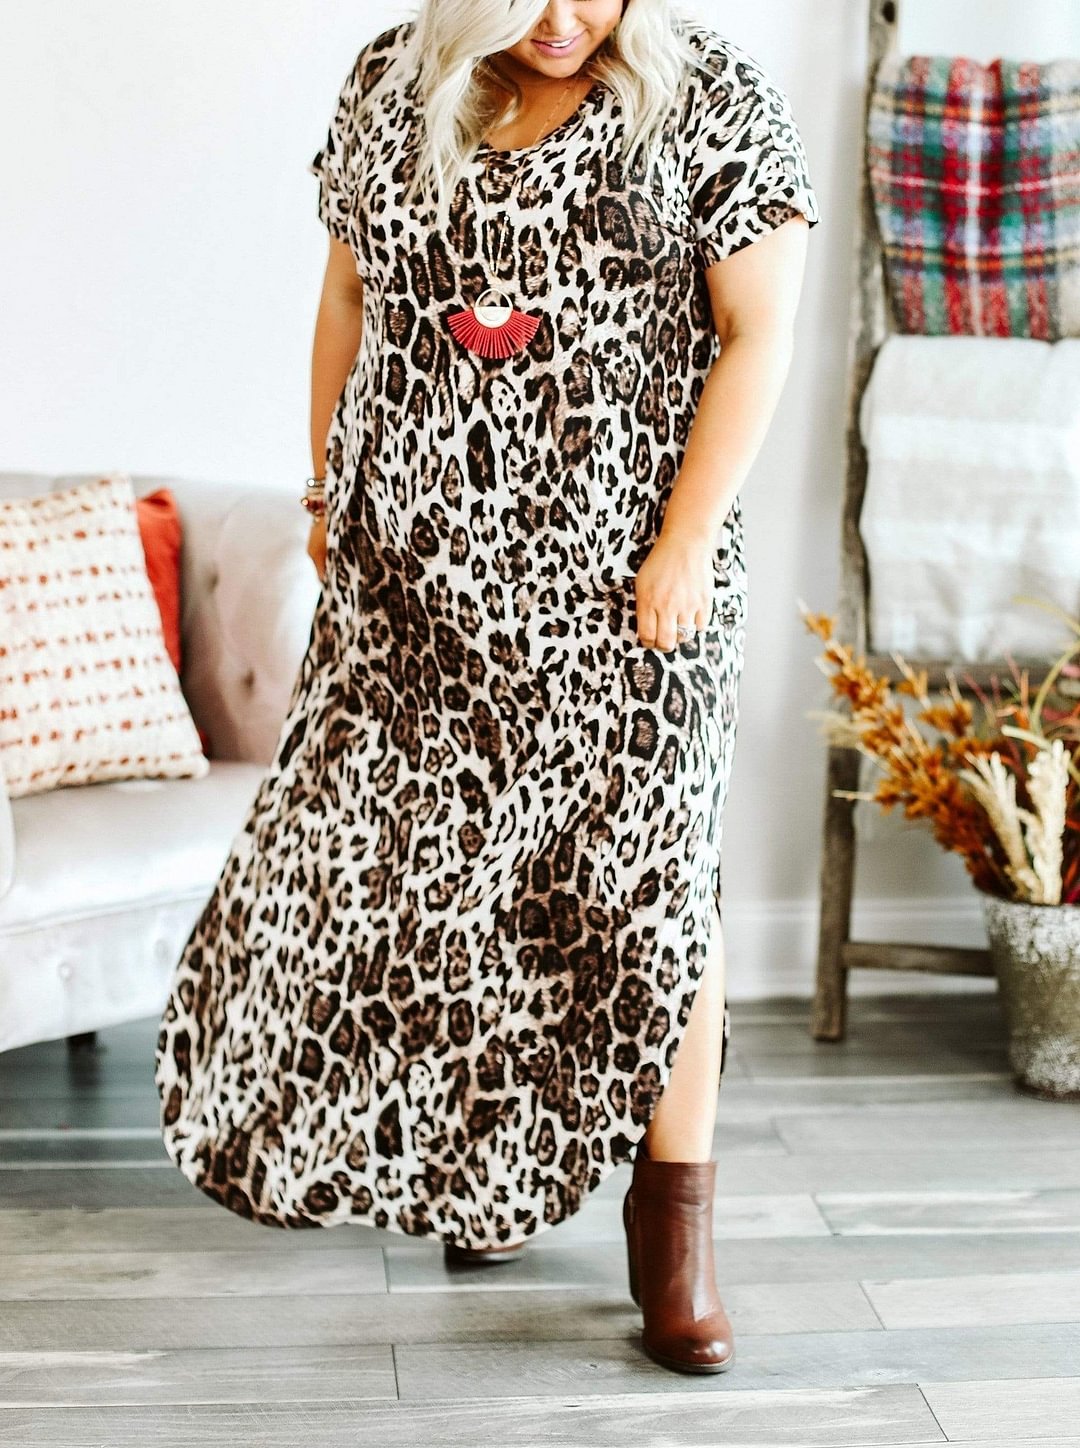 New Girl Dress | Cute Leopard Plus Size Dress